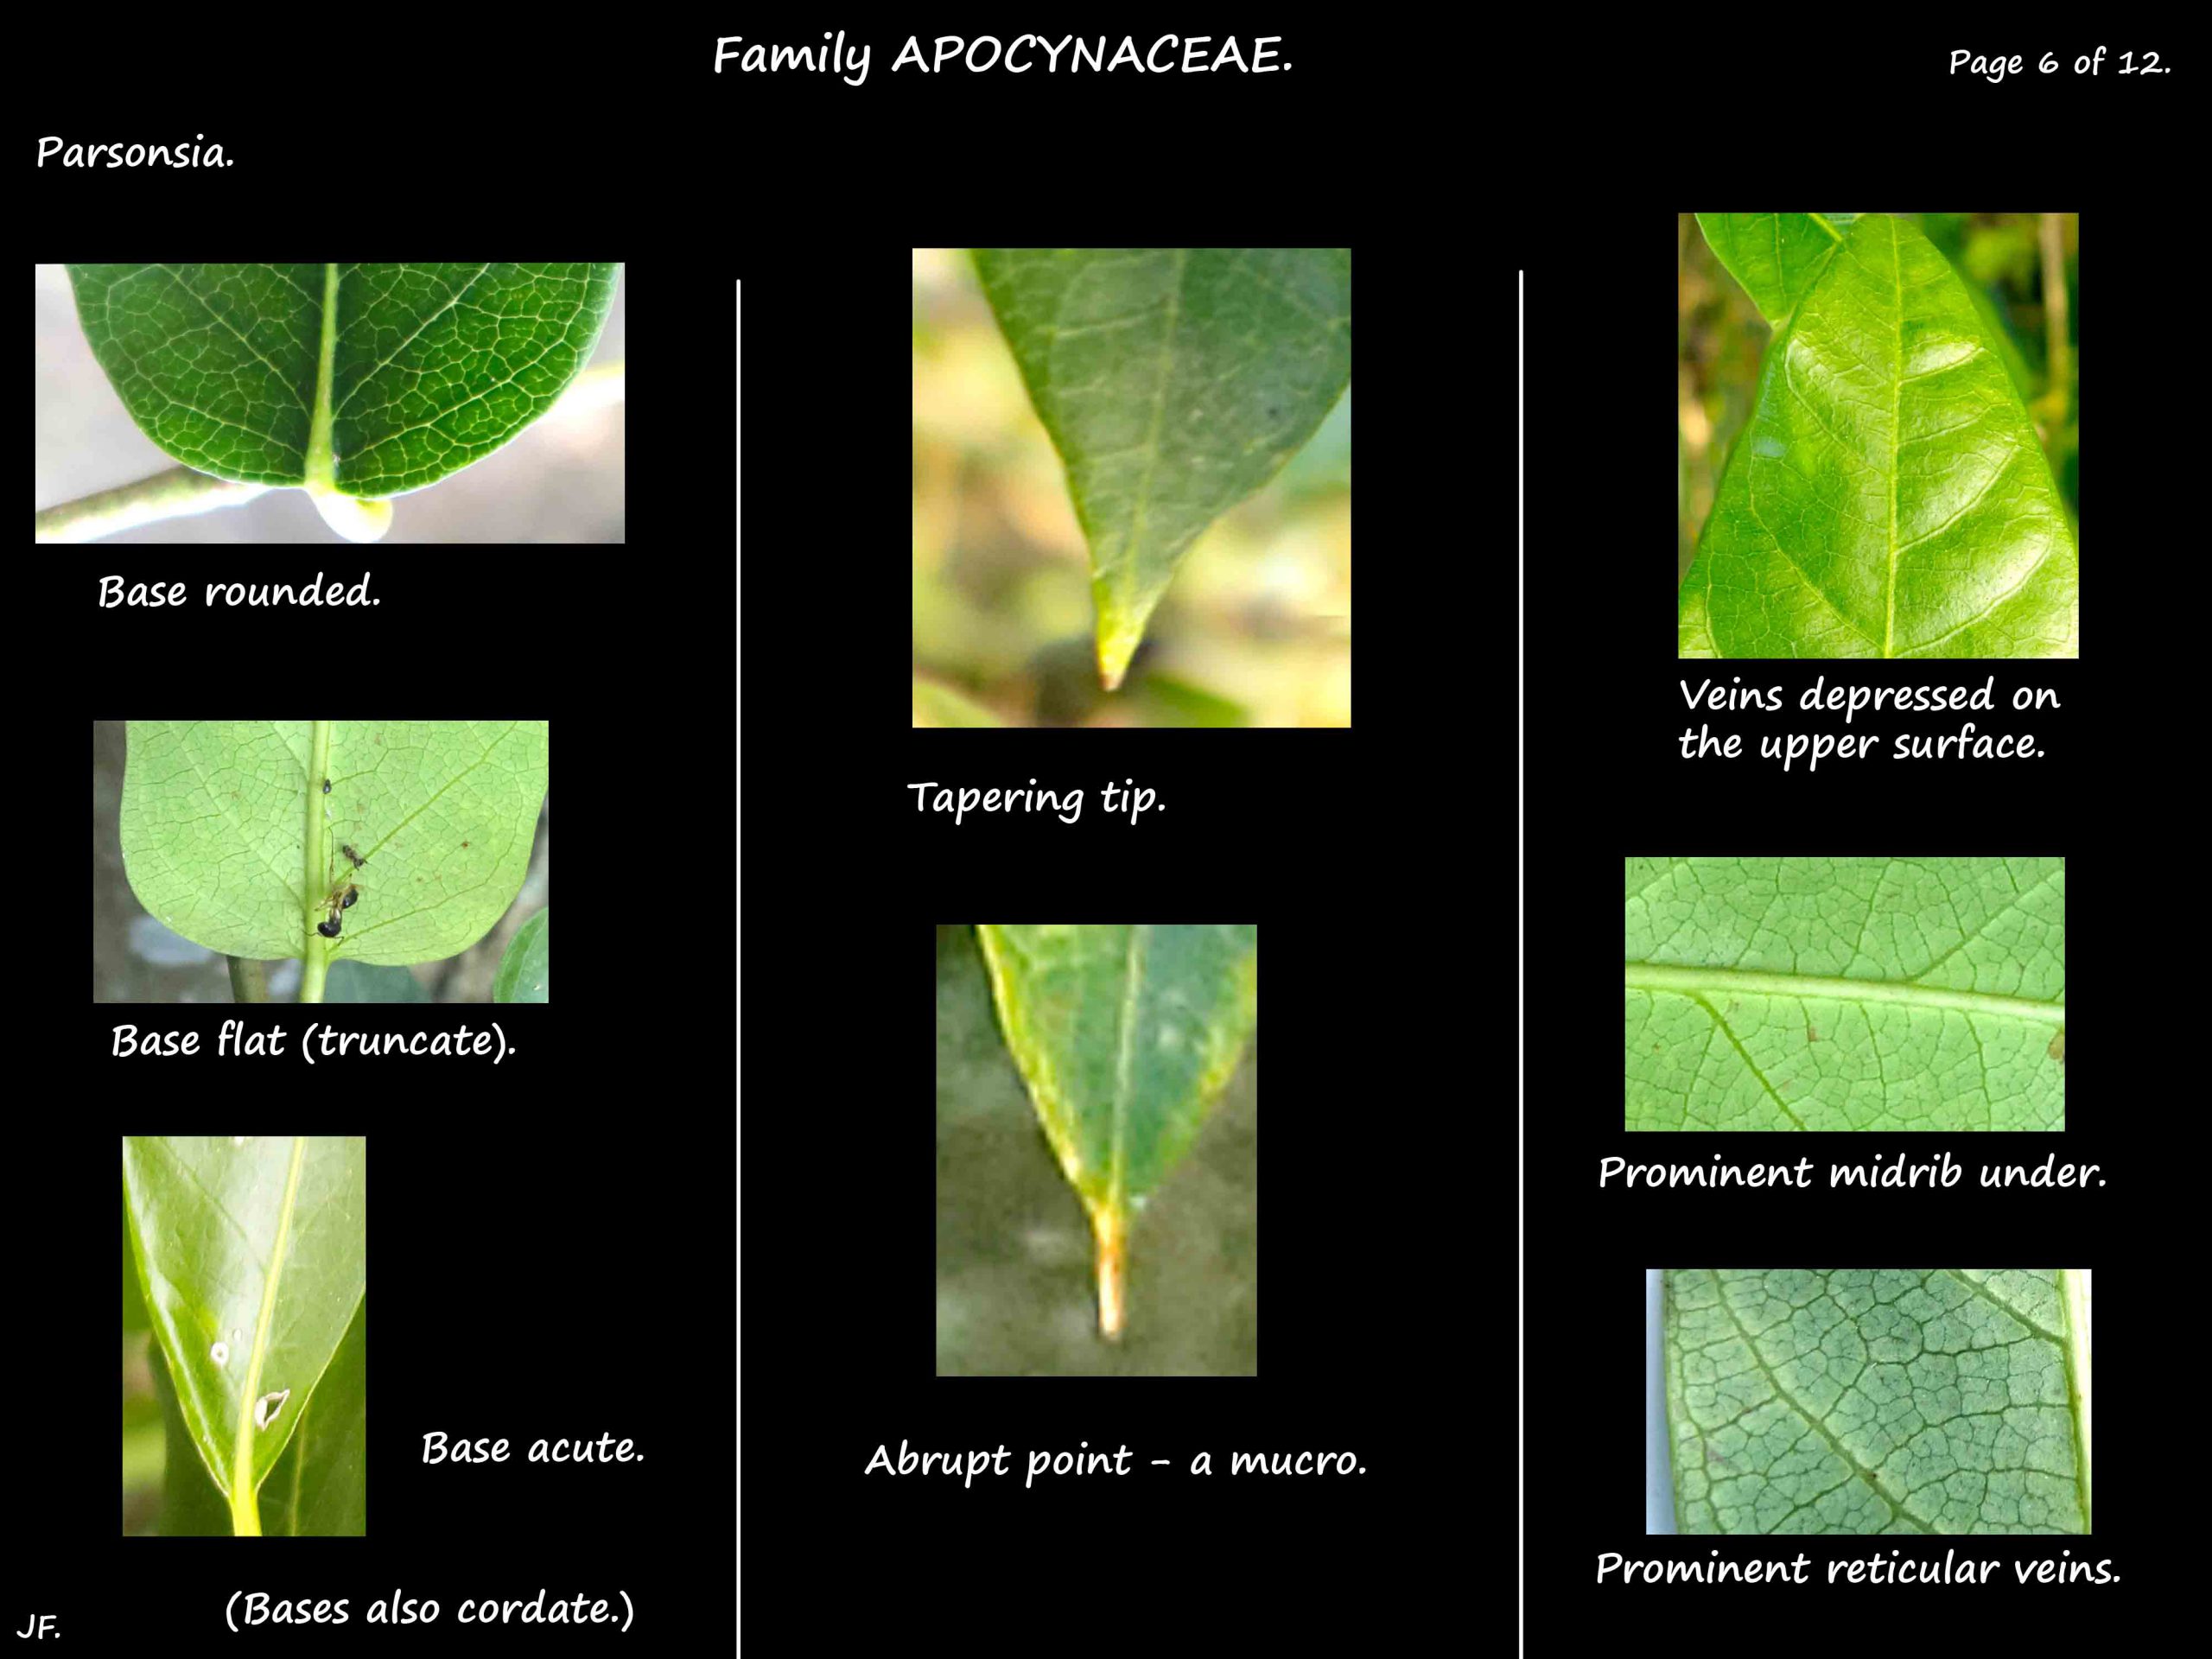 6 Parsonsia leaf tips & bases